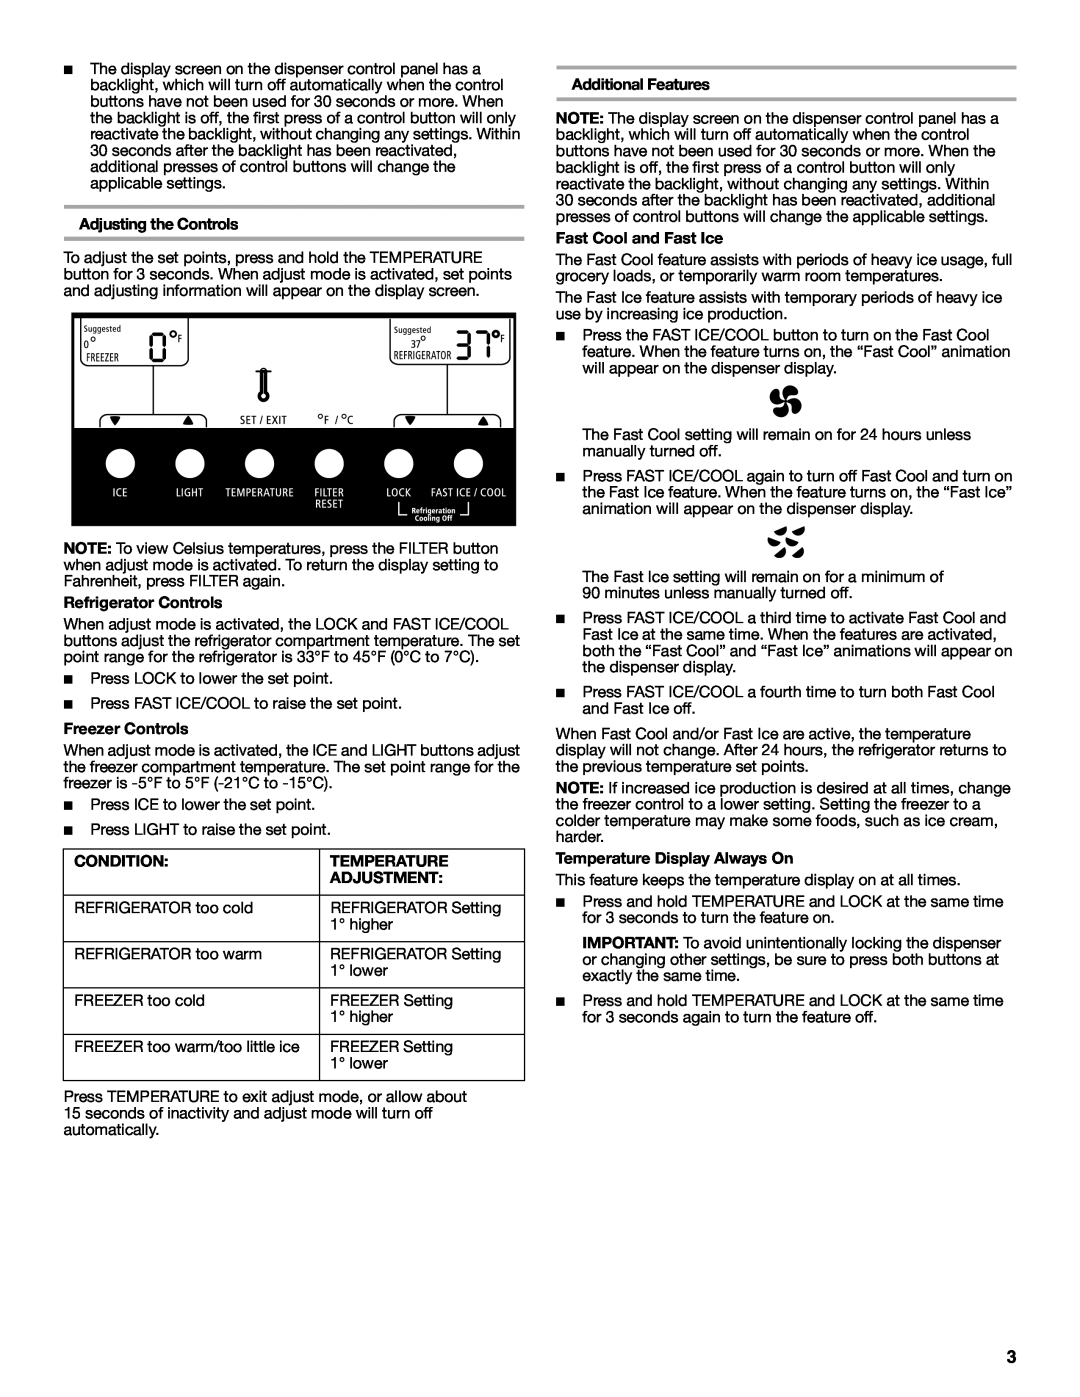 Whirlpool W10189345A Adjusting the Controls, Refrigerator Controls, Freezer Controls, Condition, Temperature, Adjustment 